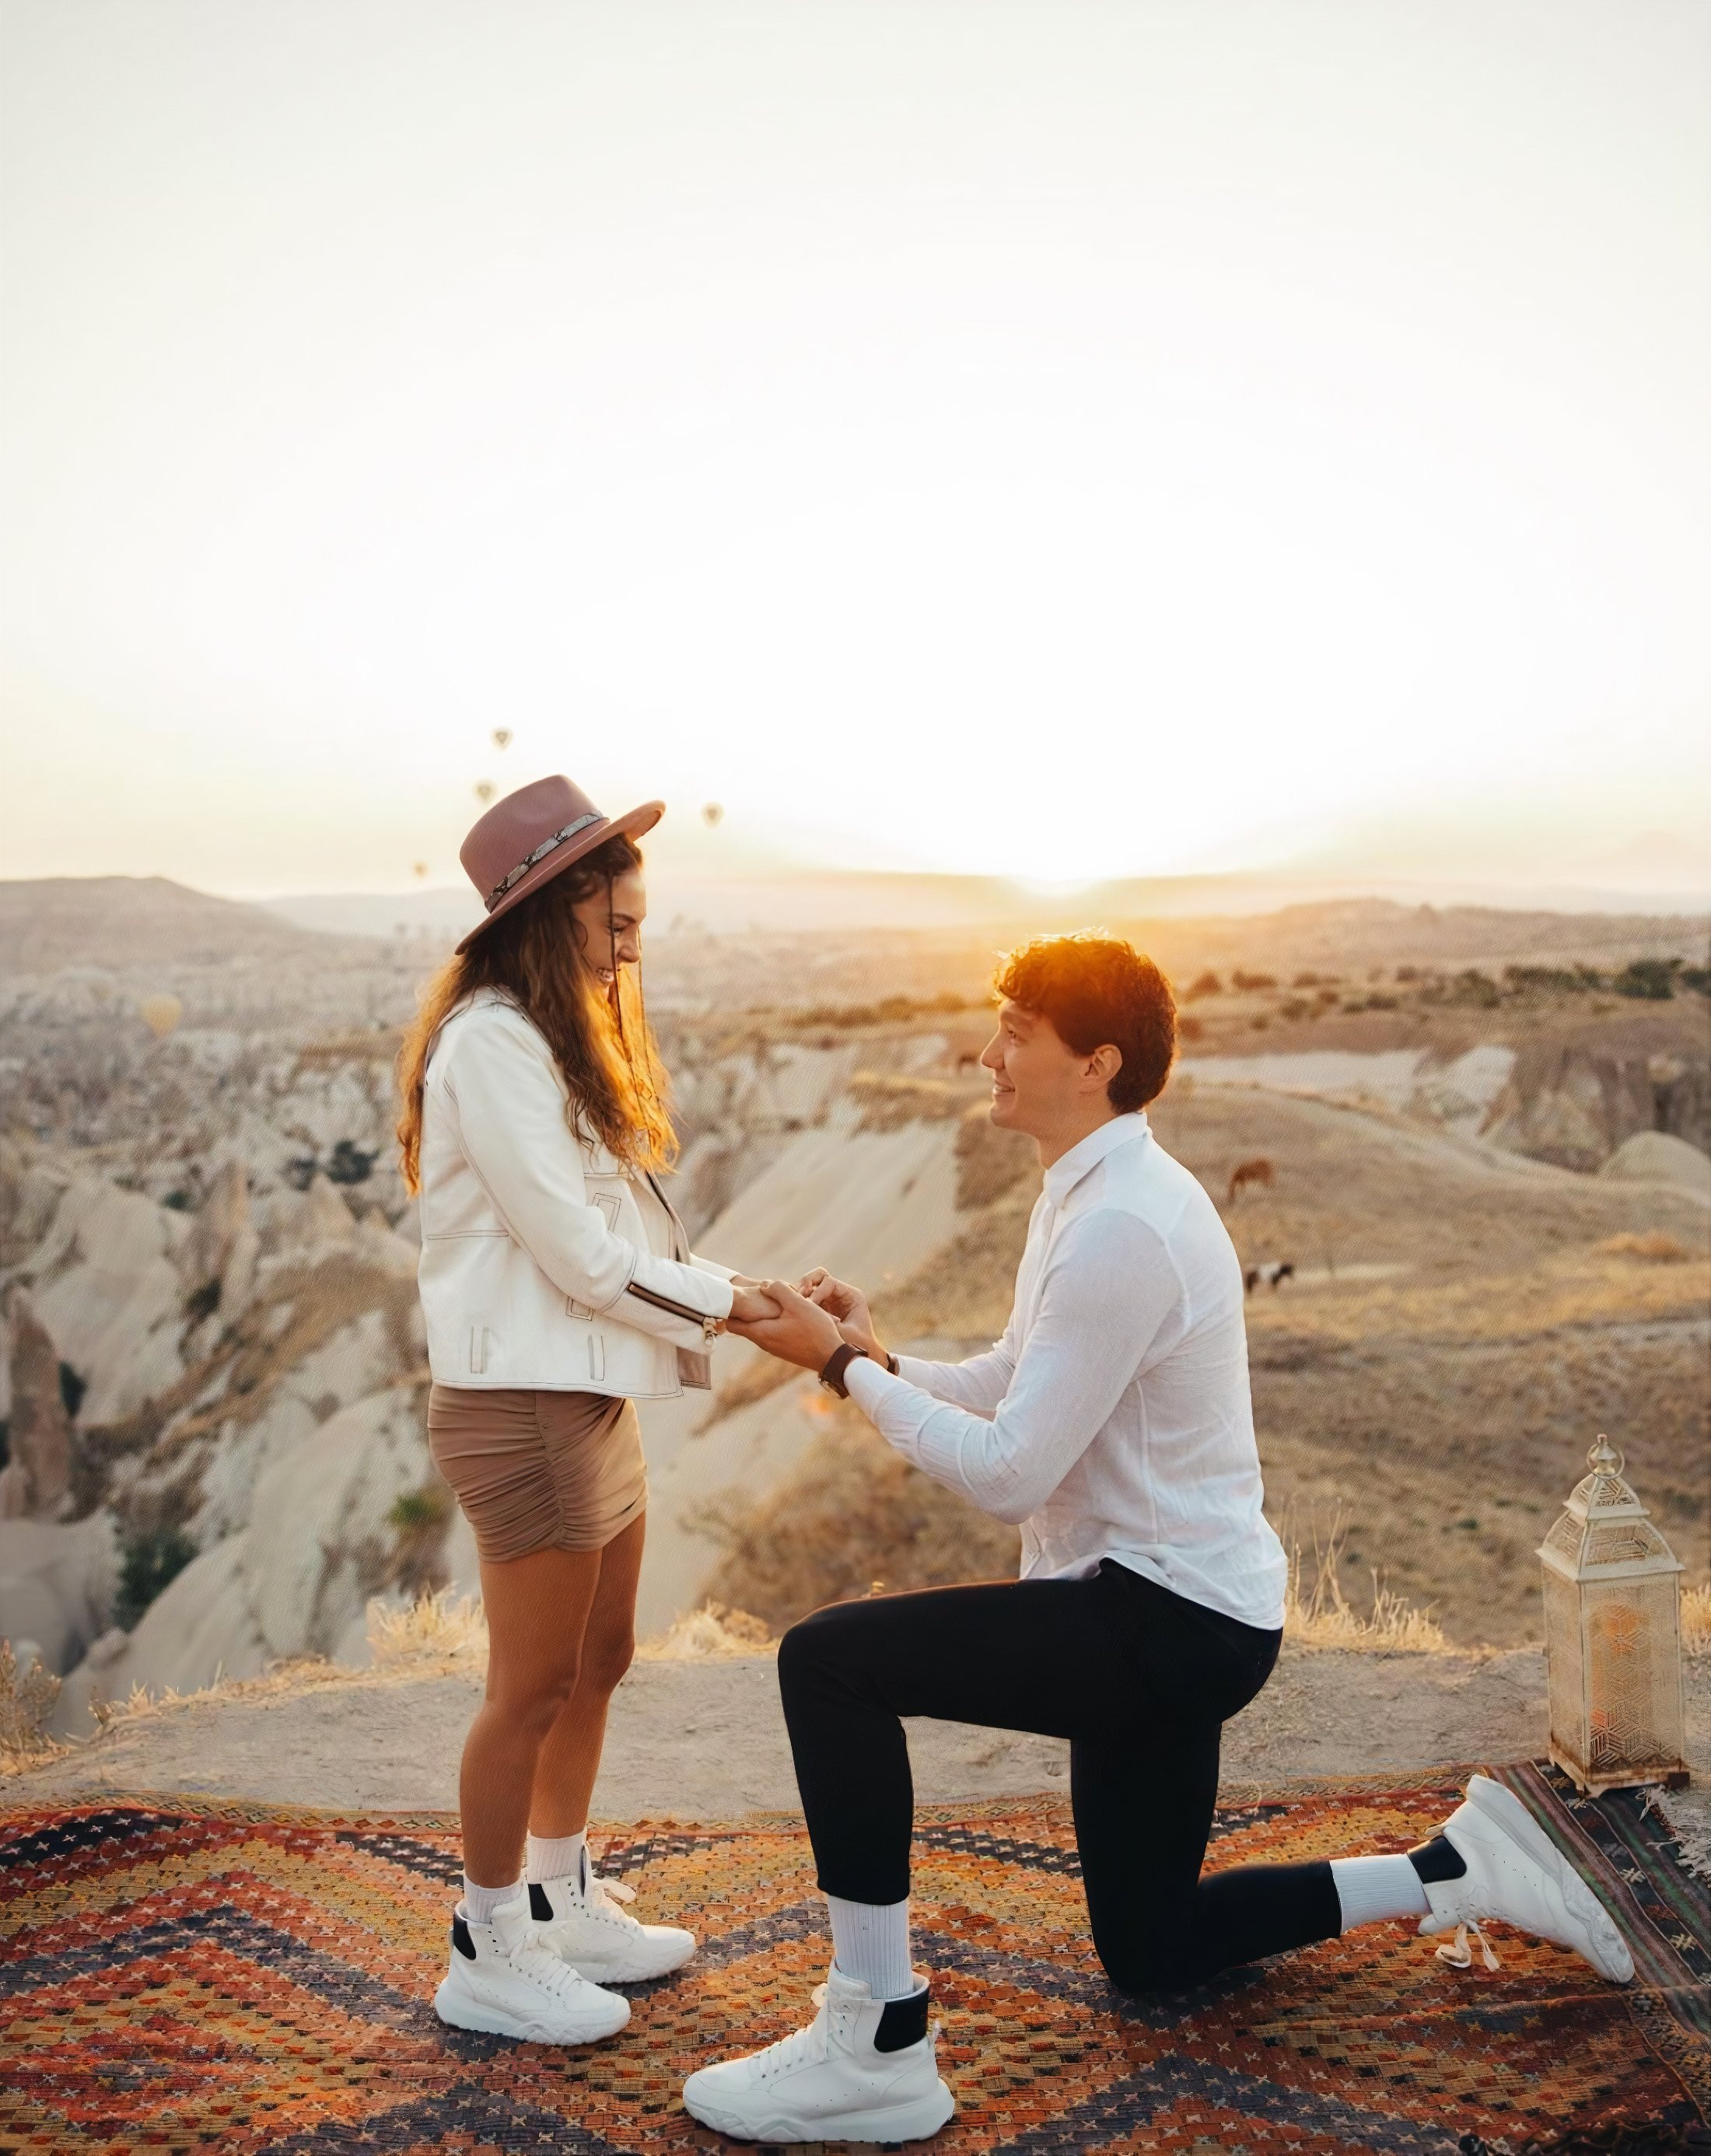 Cedi Osman proposes to girlfriend Ebru Şahin in scenic Cappadocia | Daily  Sabah